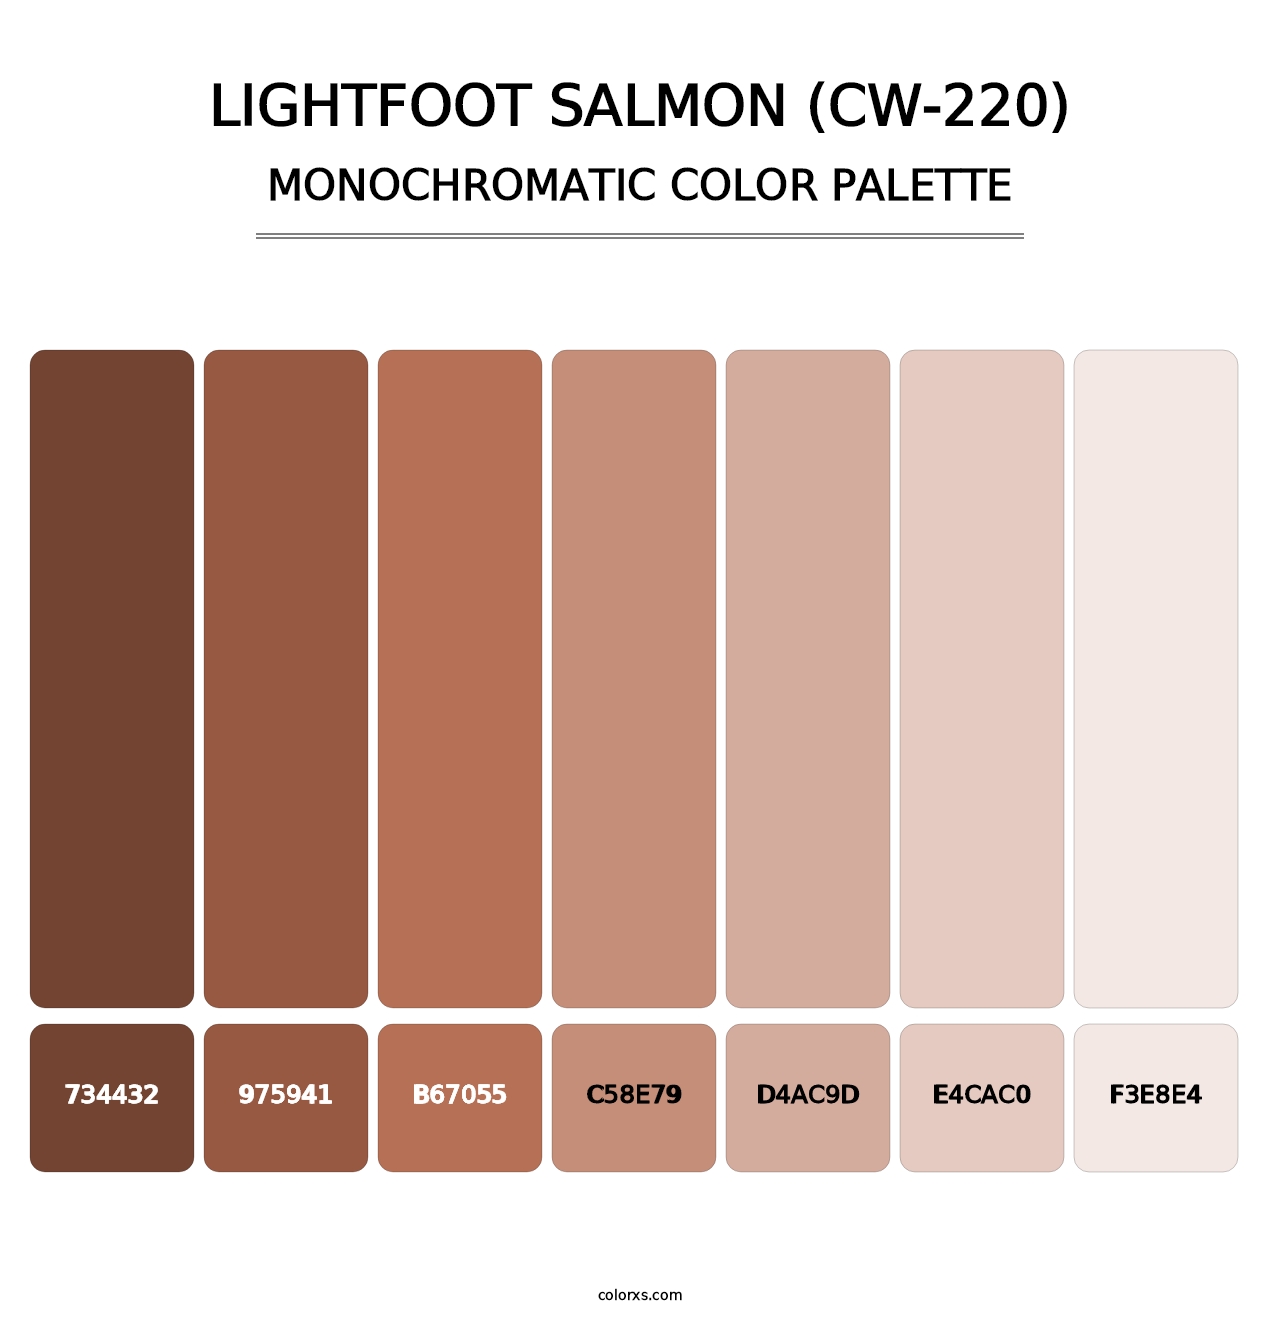 Lightfoot Salmon (CW-220) - Monochromatic Color Palette